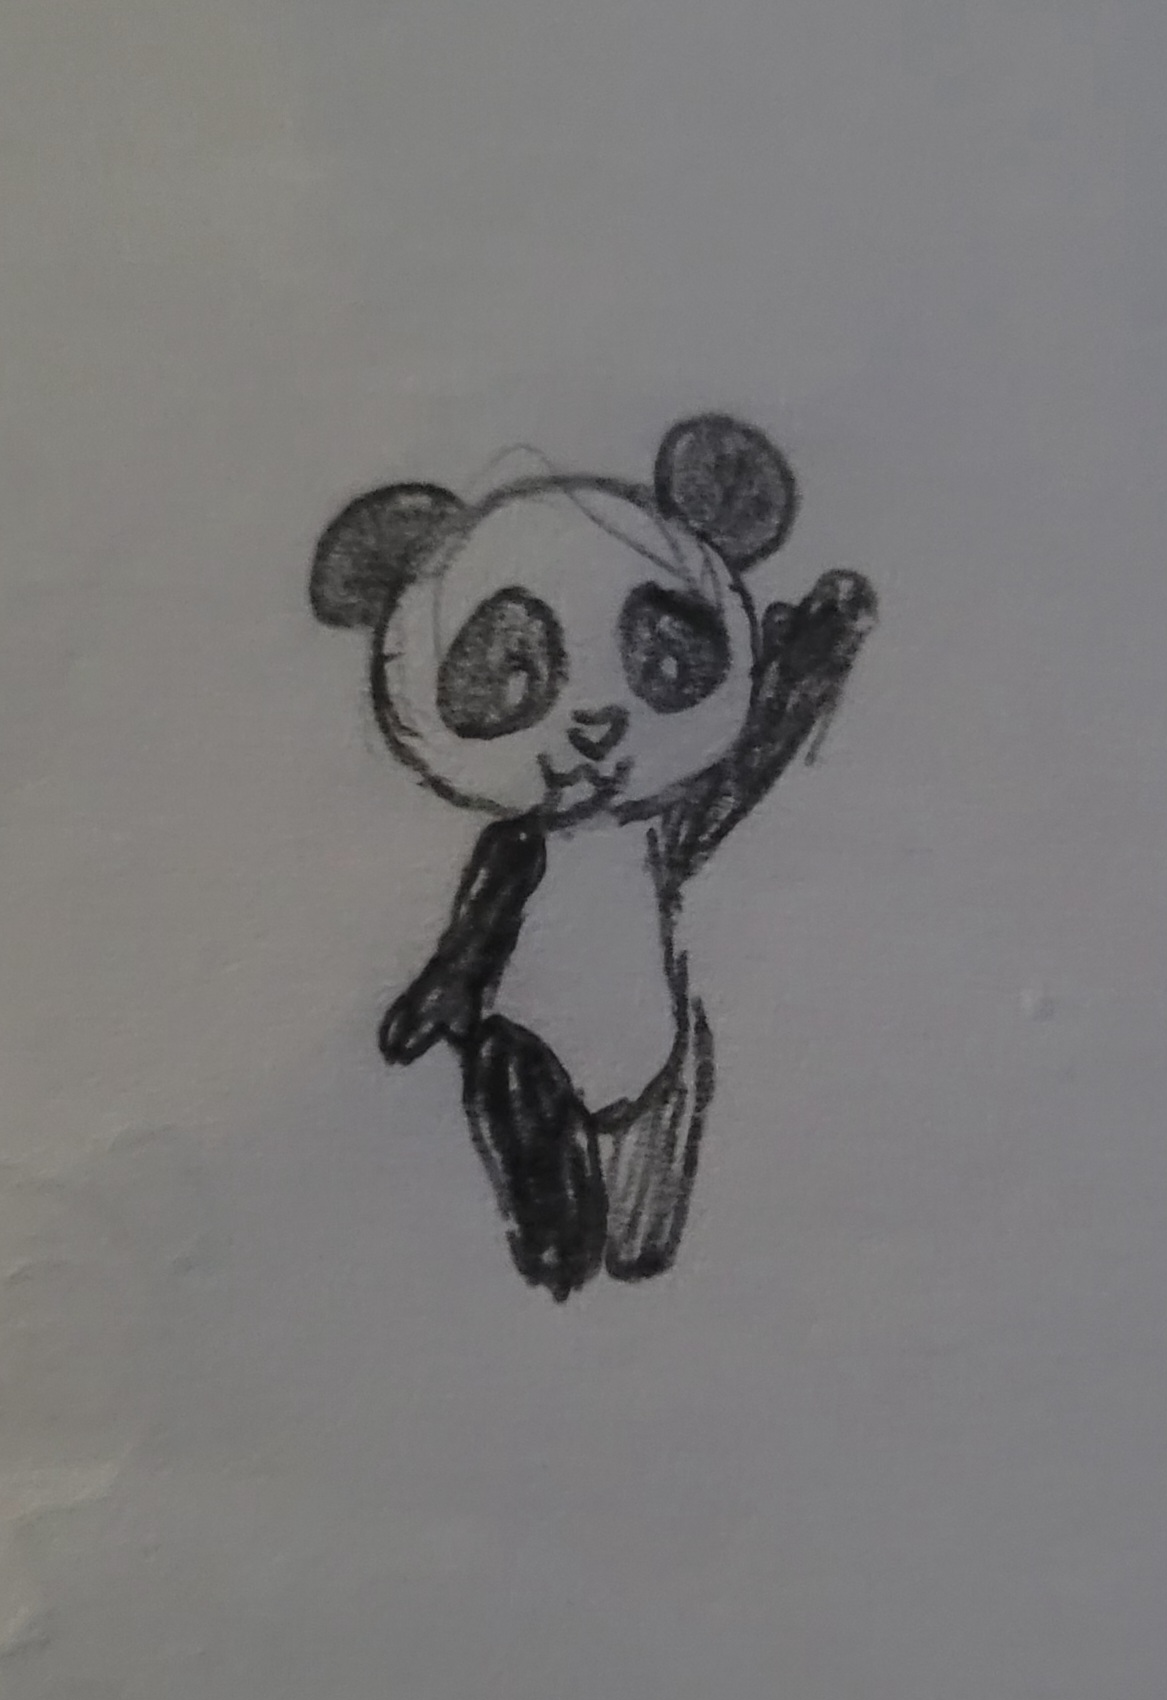 Panda elegante Small para colorir by PoccnnIndustriesPT on DeviantArt